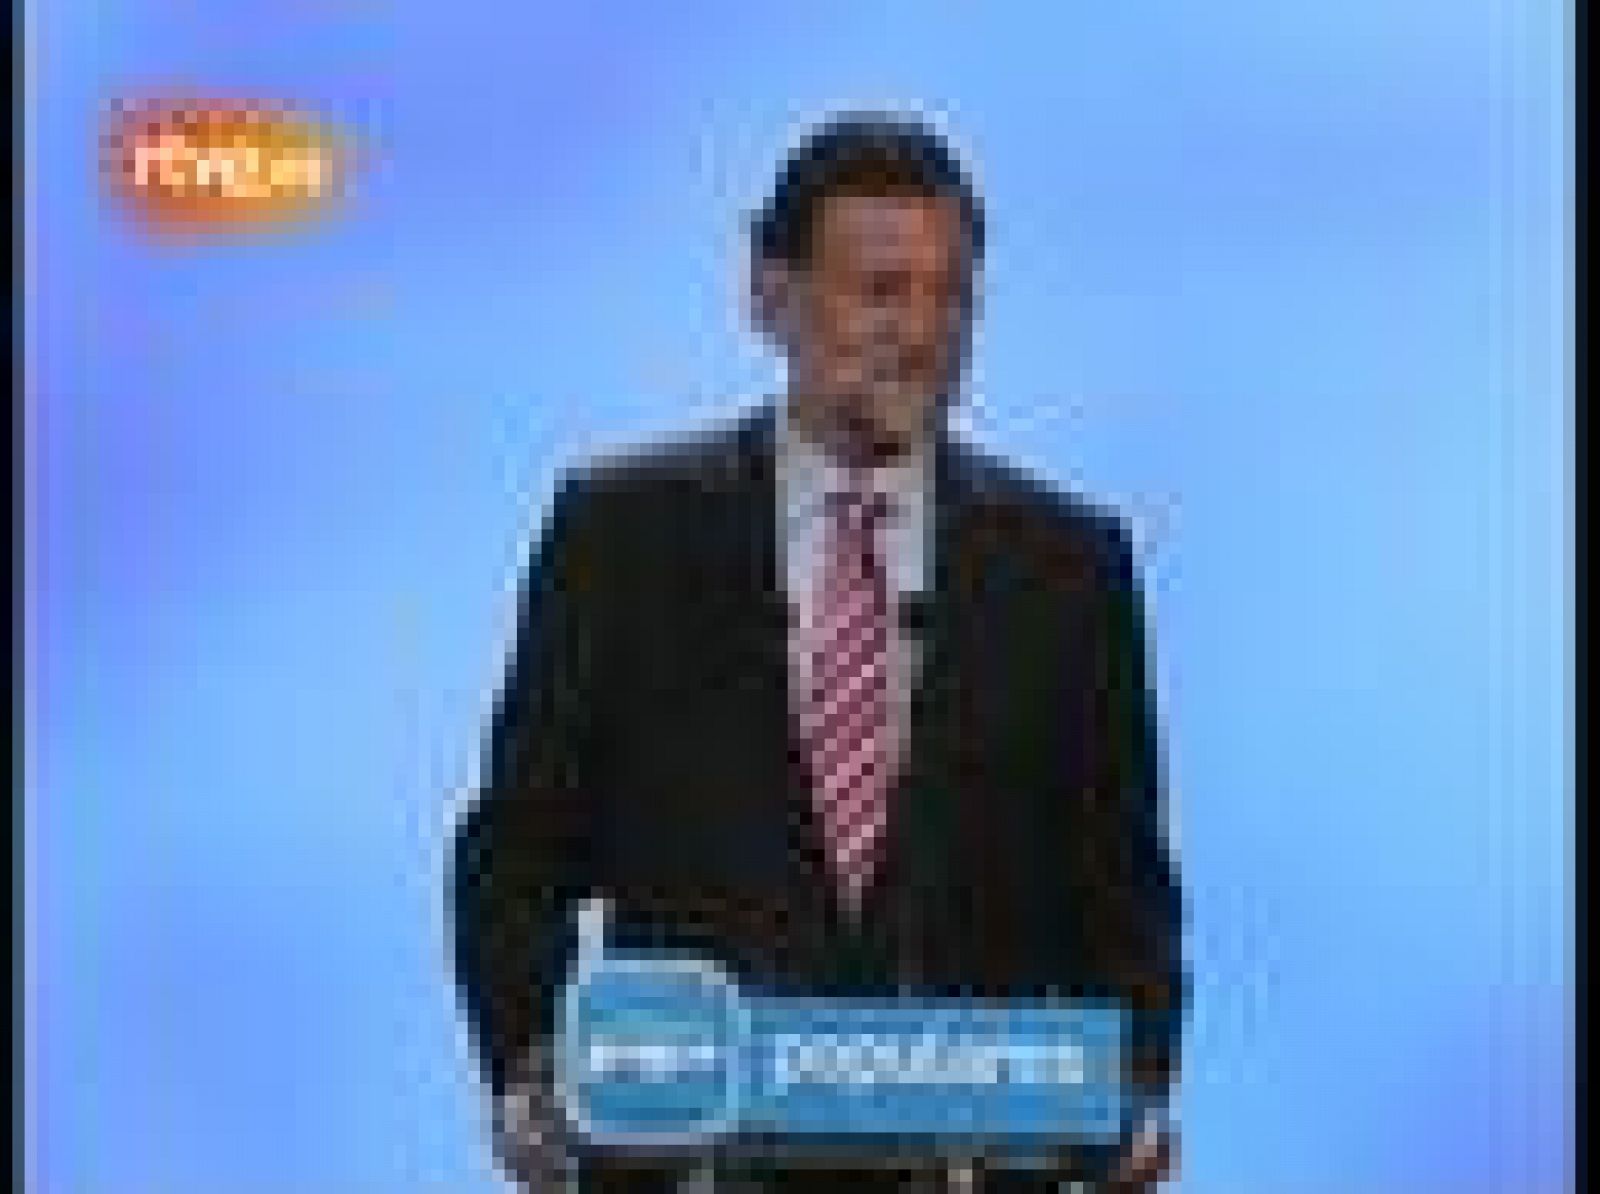 Comparecencia íntegra de Rajoy | RTVE Play